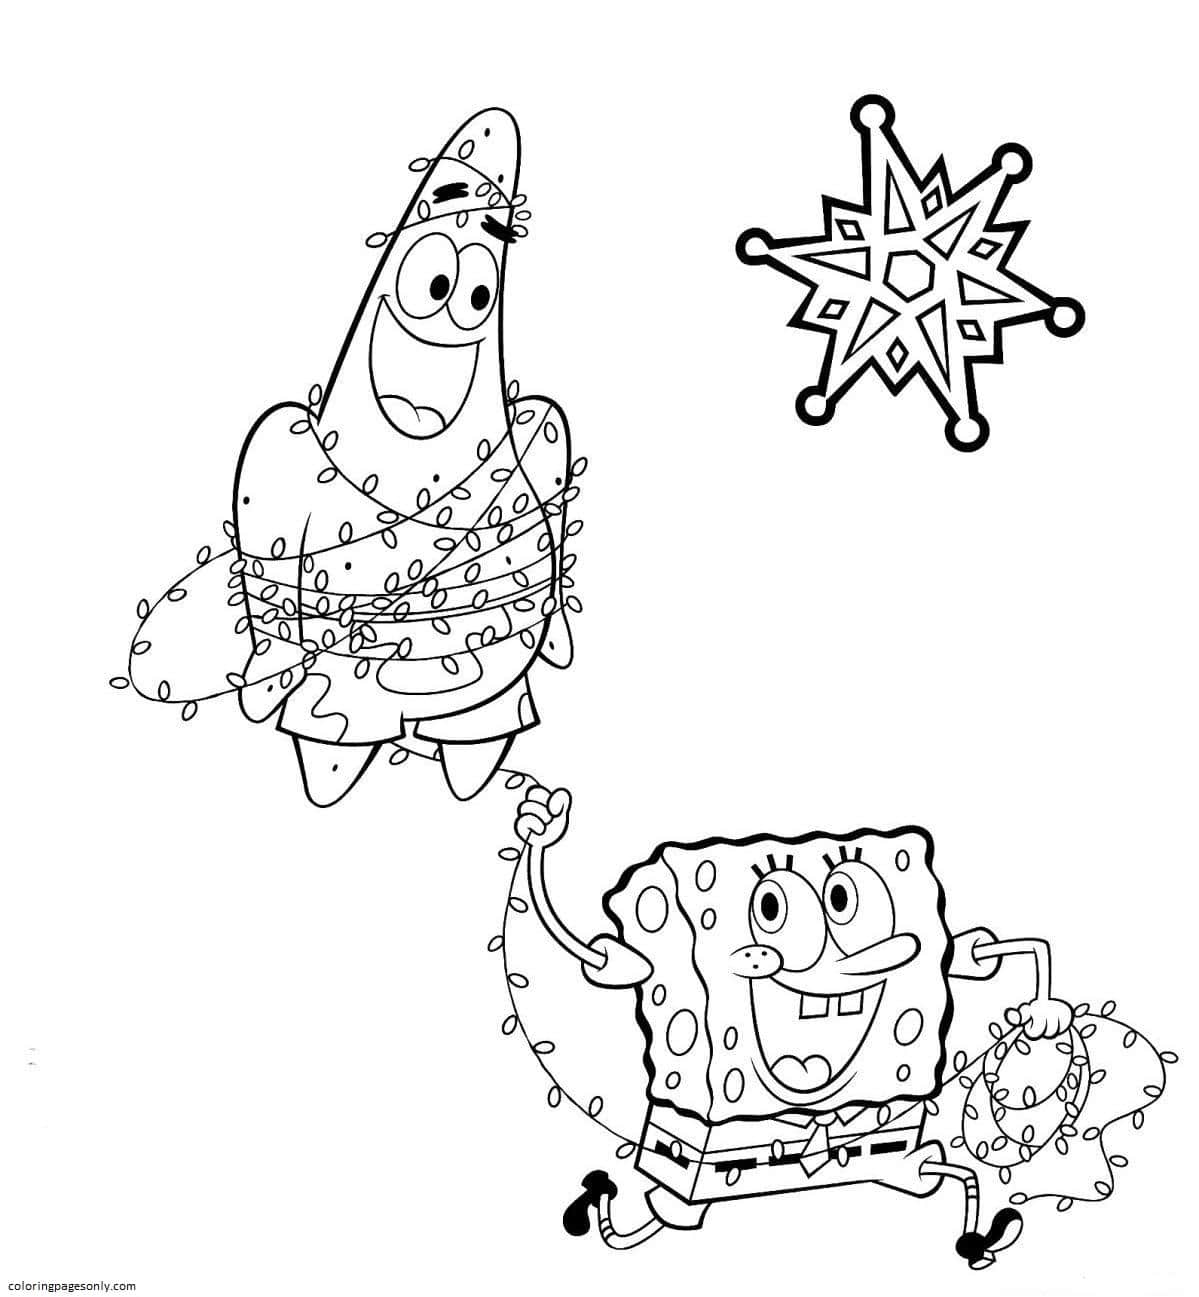 Patrick And Spongebob X-mas Coloring Page